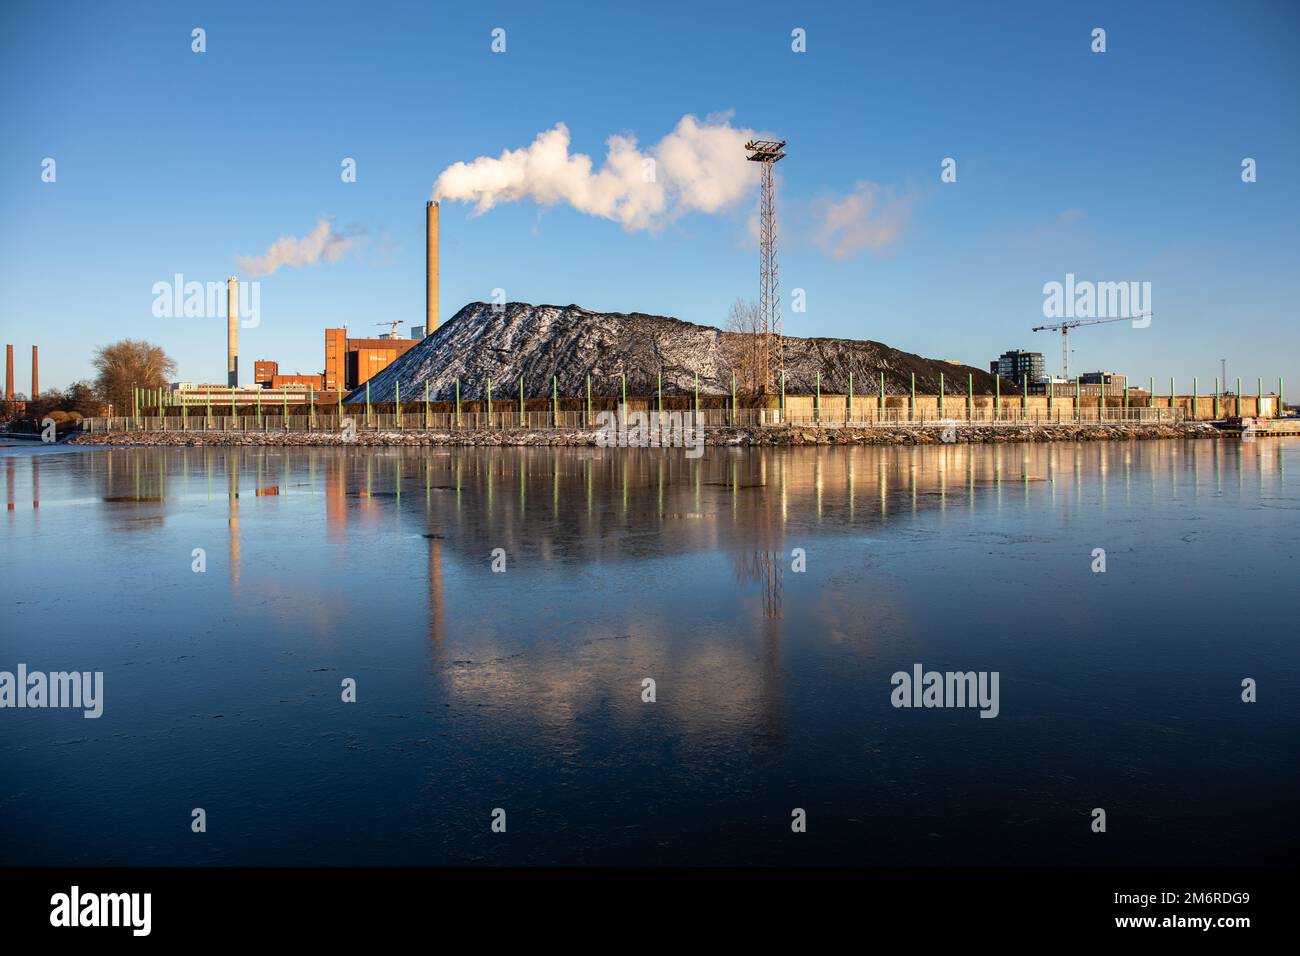 Hanasaari coal-fired cogeneration power plant coal stock on a clear winter day in Helsinki, Finland Stock Photo